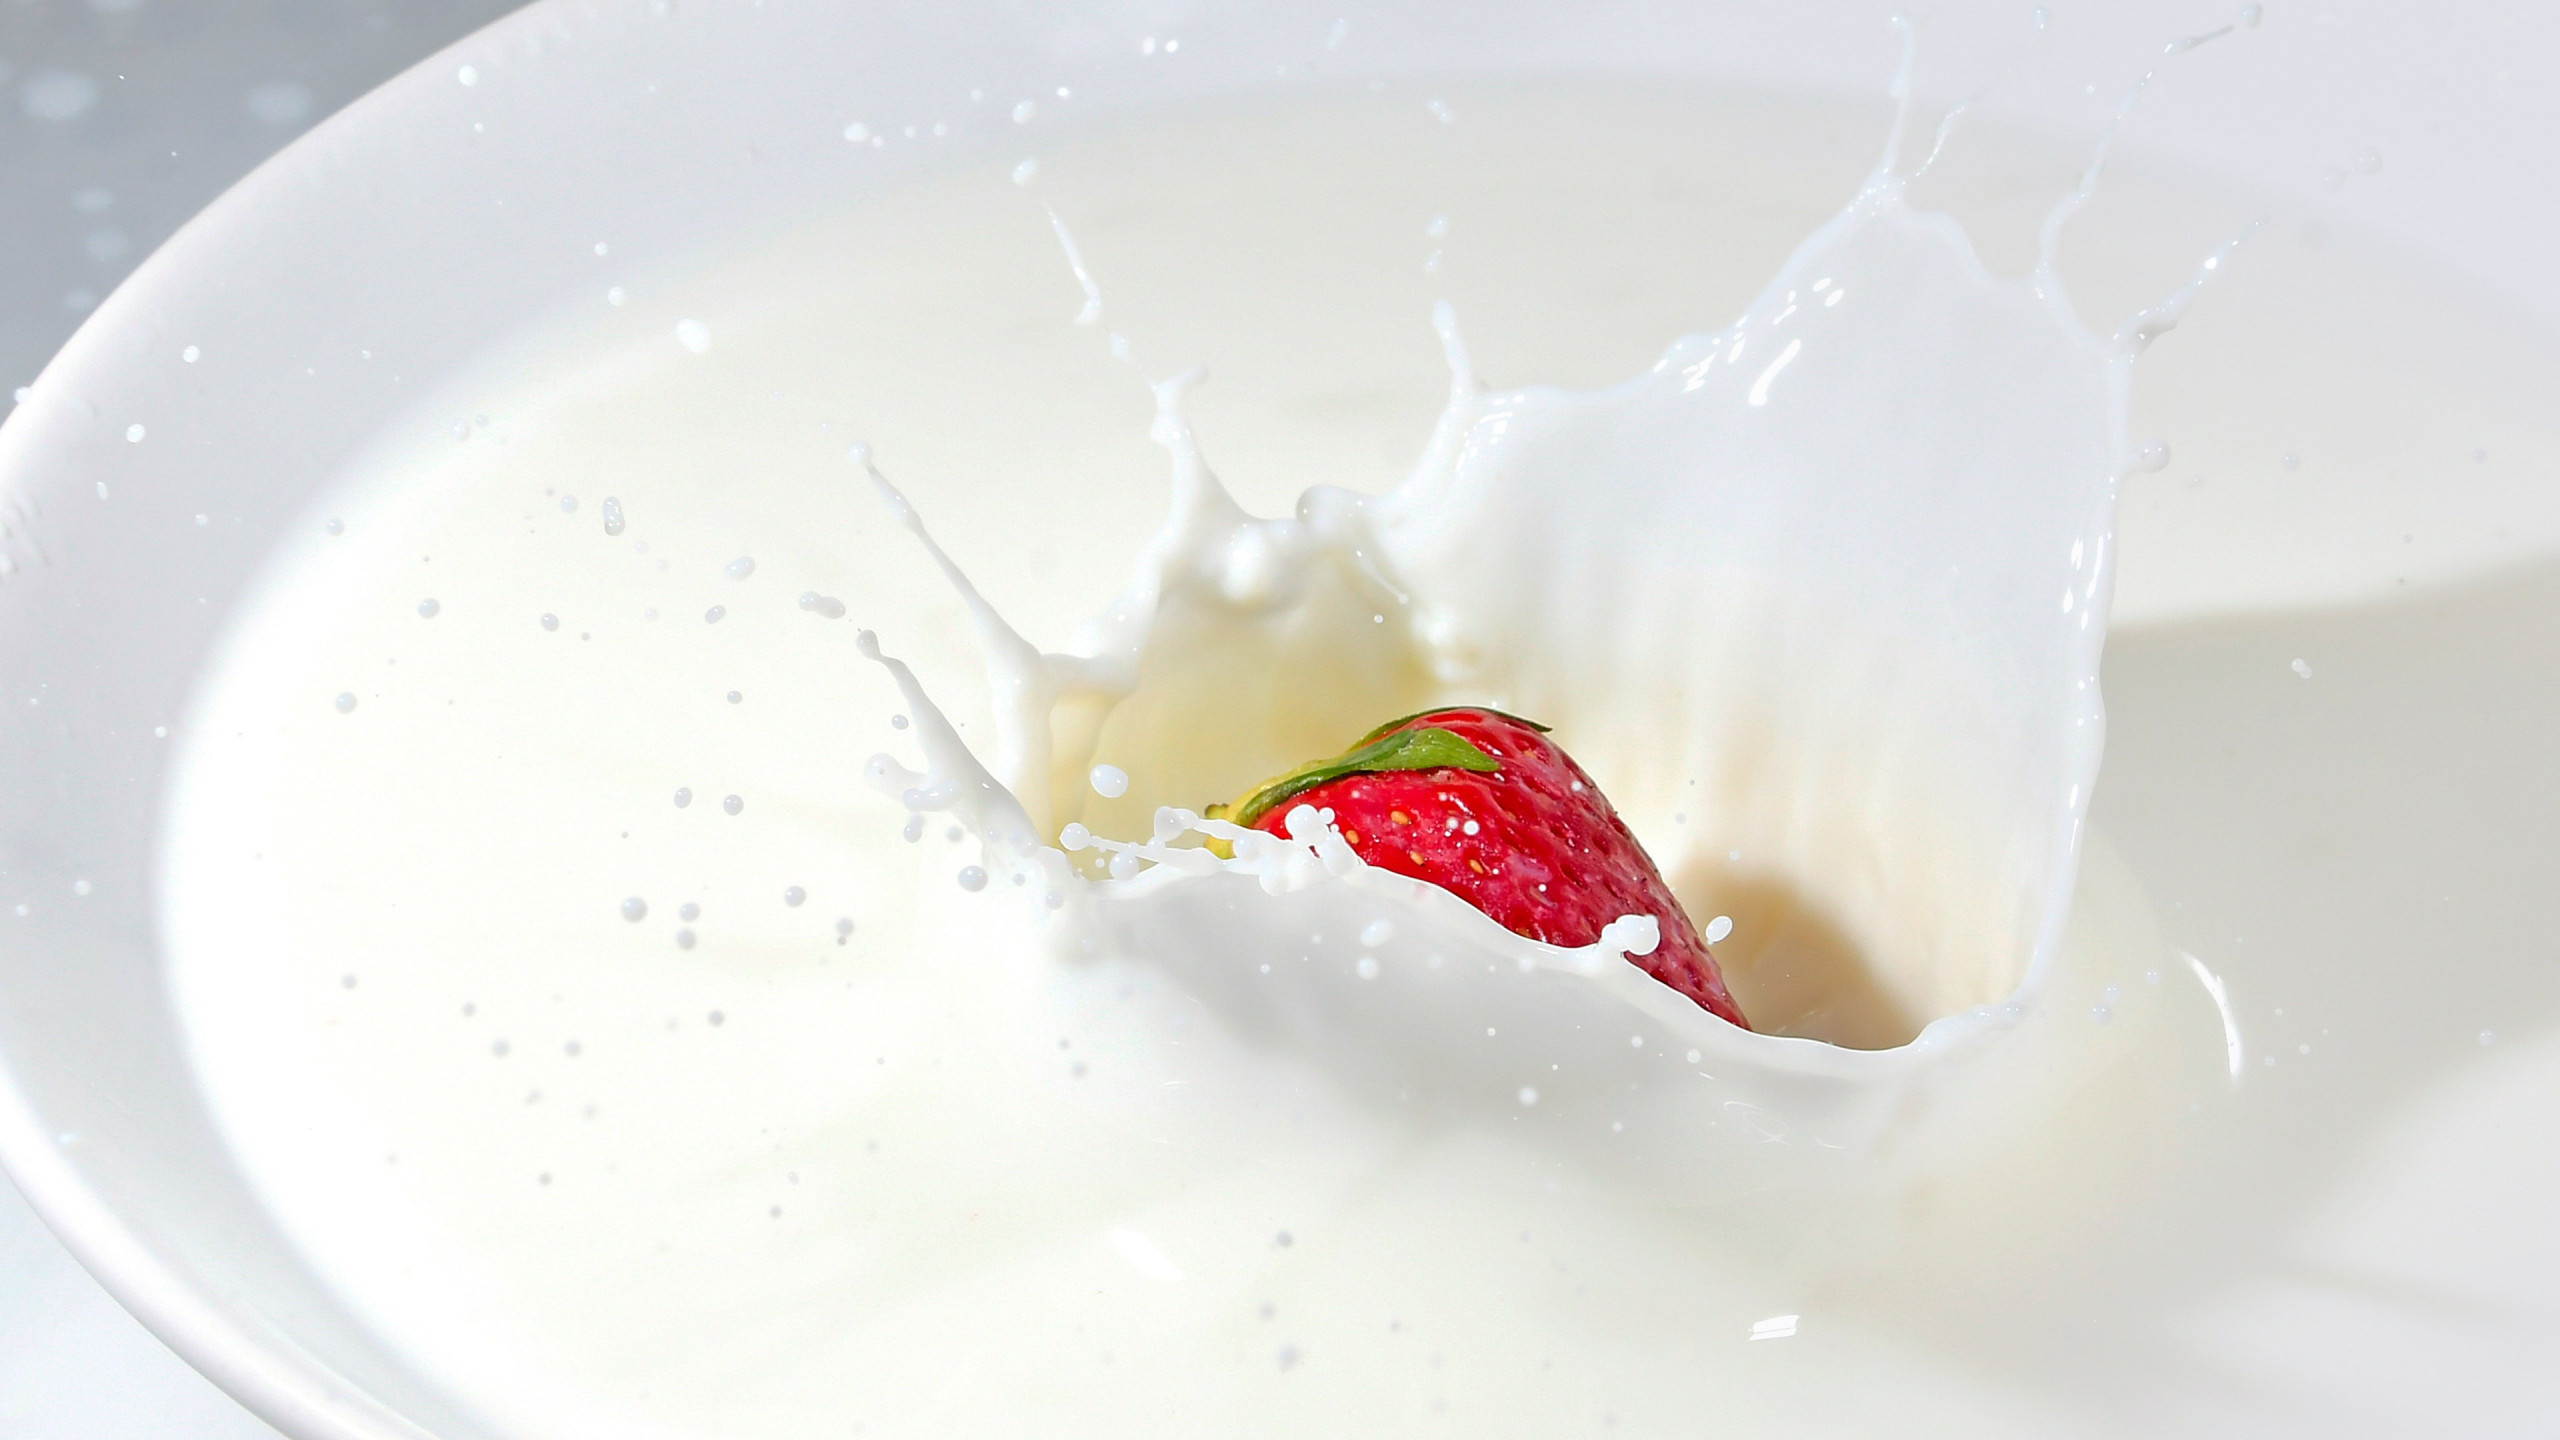 Strawberry splashing in milk wallpaper 2560x1440